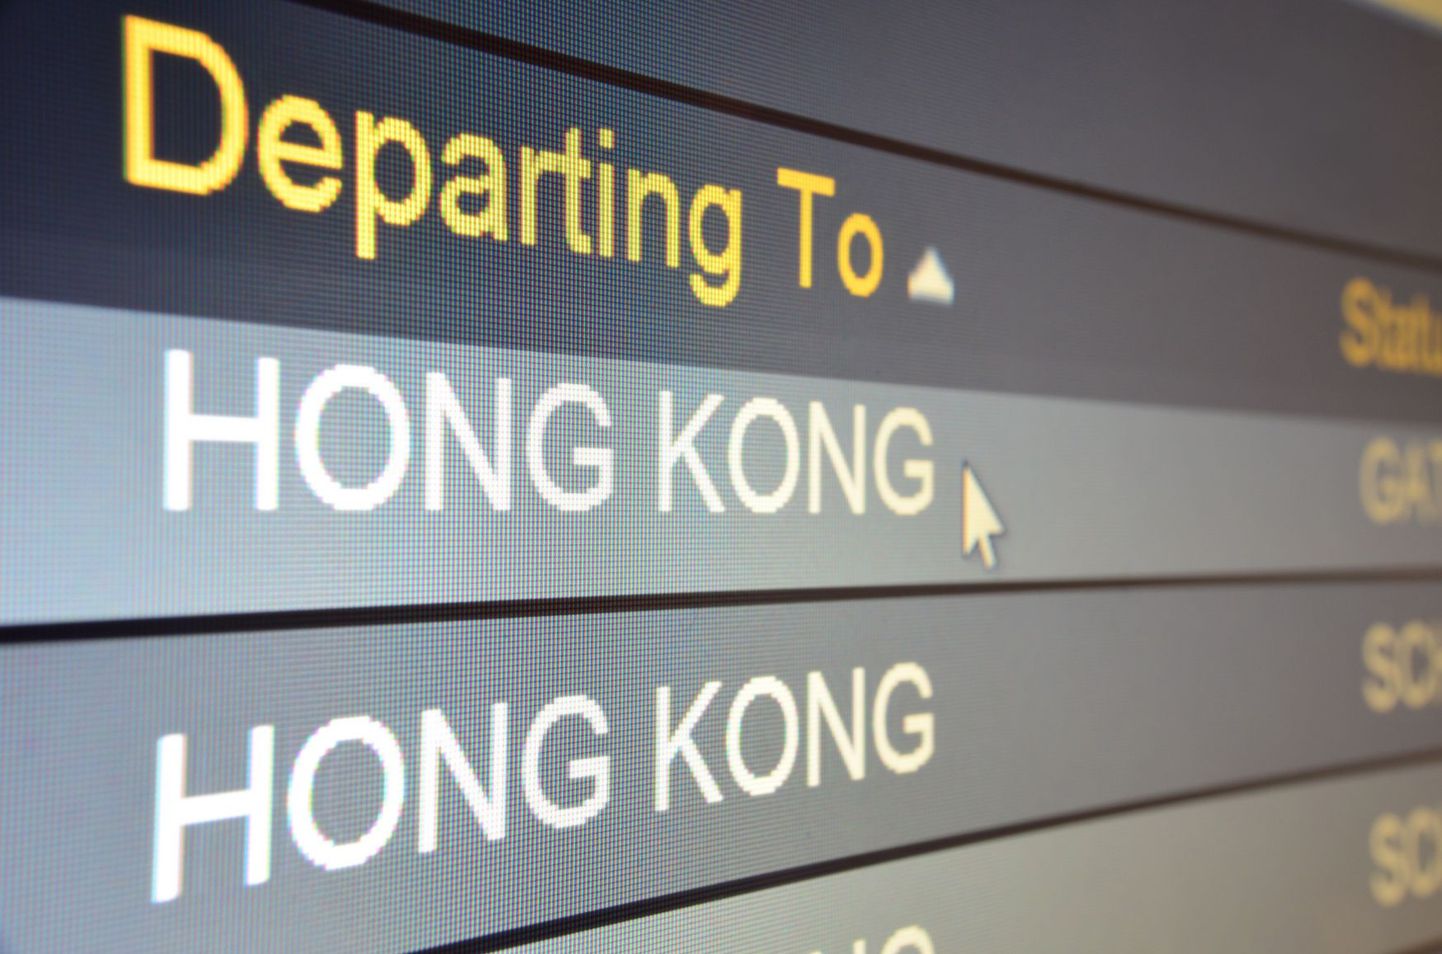 Ka Hong Kongi lennujaamas on rohkem lende hilinema hakanud.